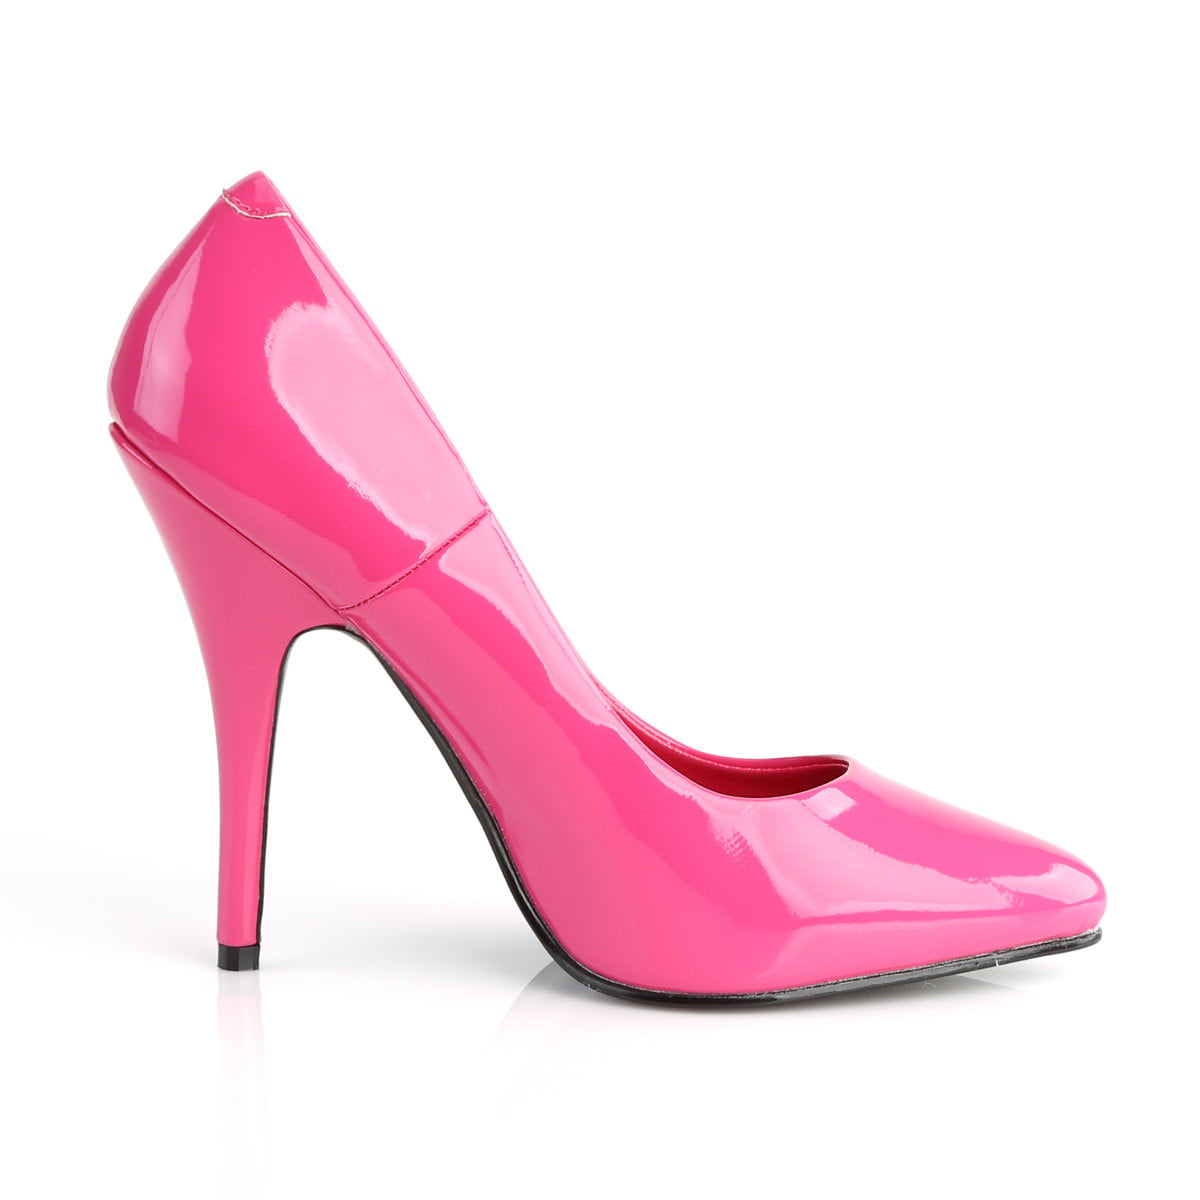 5 Inch Heel SEDUCE-420 Hot Pink Patent